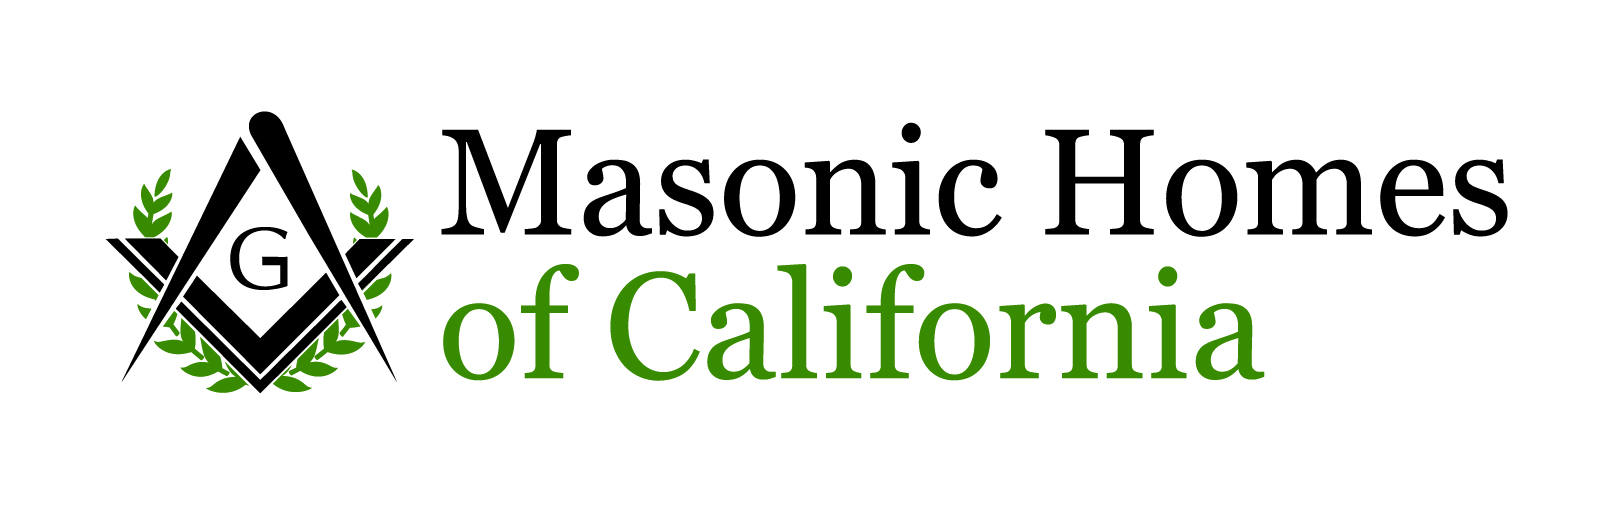 A. Masonic Homes of California (Presenting)